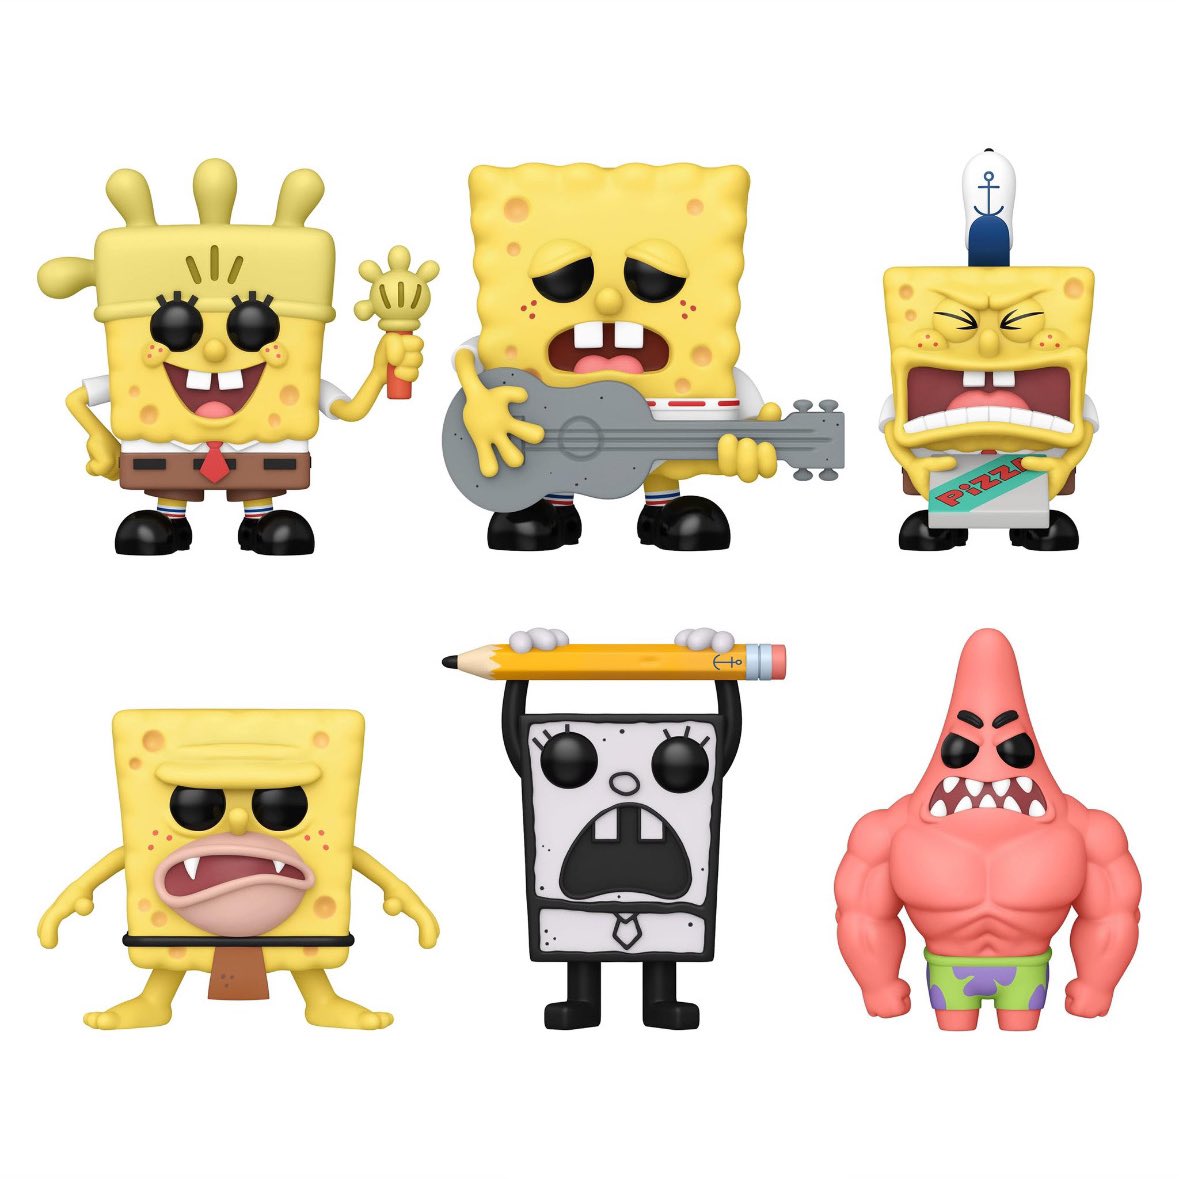 ‘SPONGEBOB’ 25th Anniversary Pop Vinyls are available for pre-order! DoodleBob: amzn.to/3yGJa3c Caveman SpongeBob: amzn.to/4buG5Sp Fry Cook Games Patrick: amzn.to/3yAYONs Glove World SpongeBob: amzn.to/45aFxPm Ripped Pants SpongeBob: